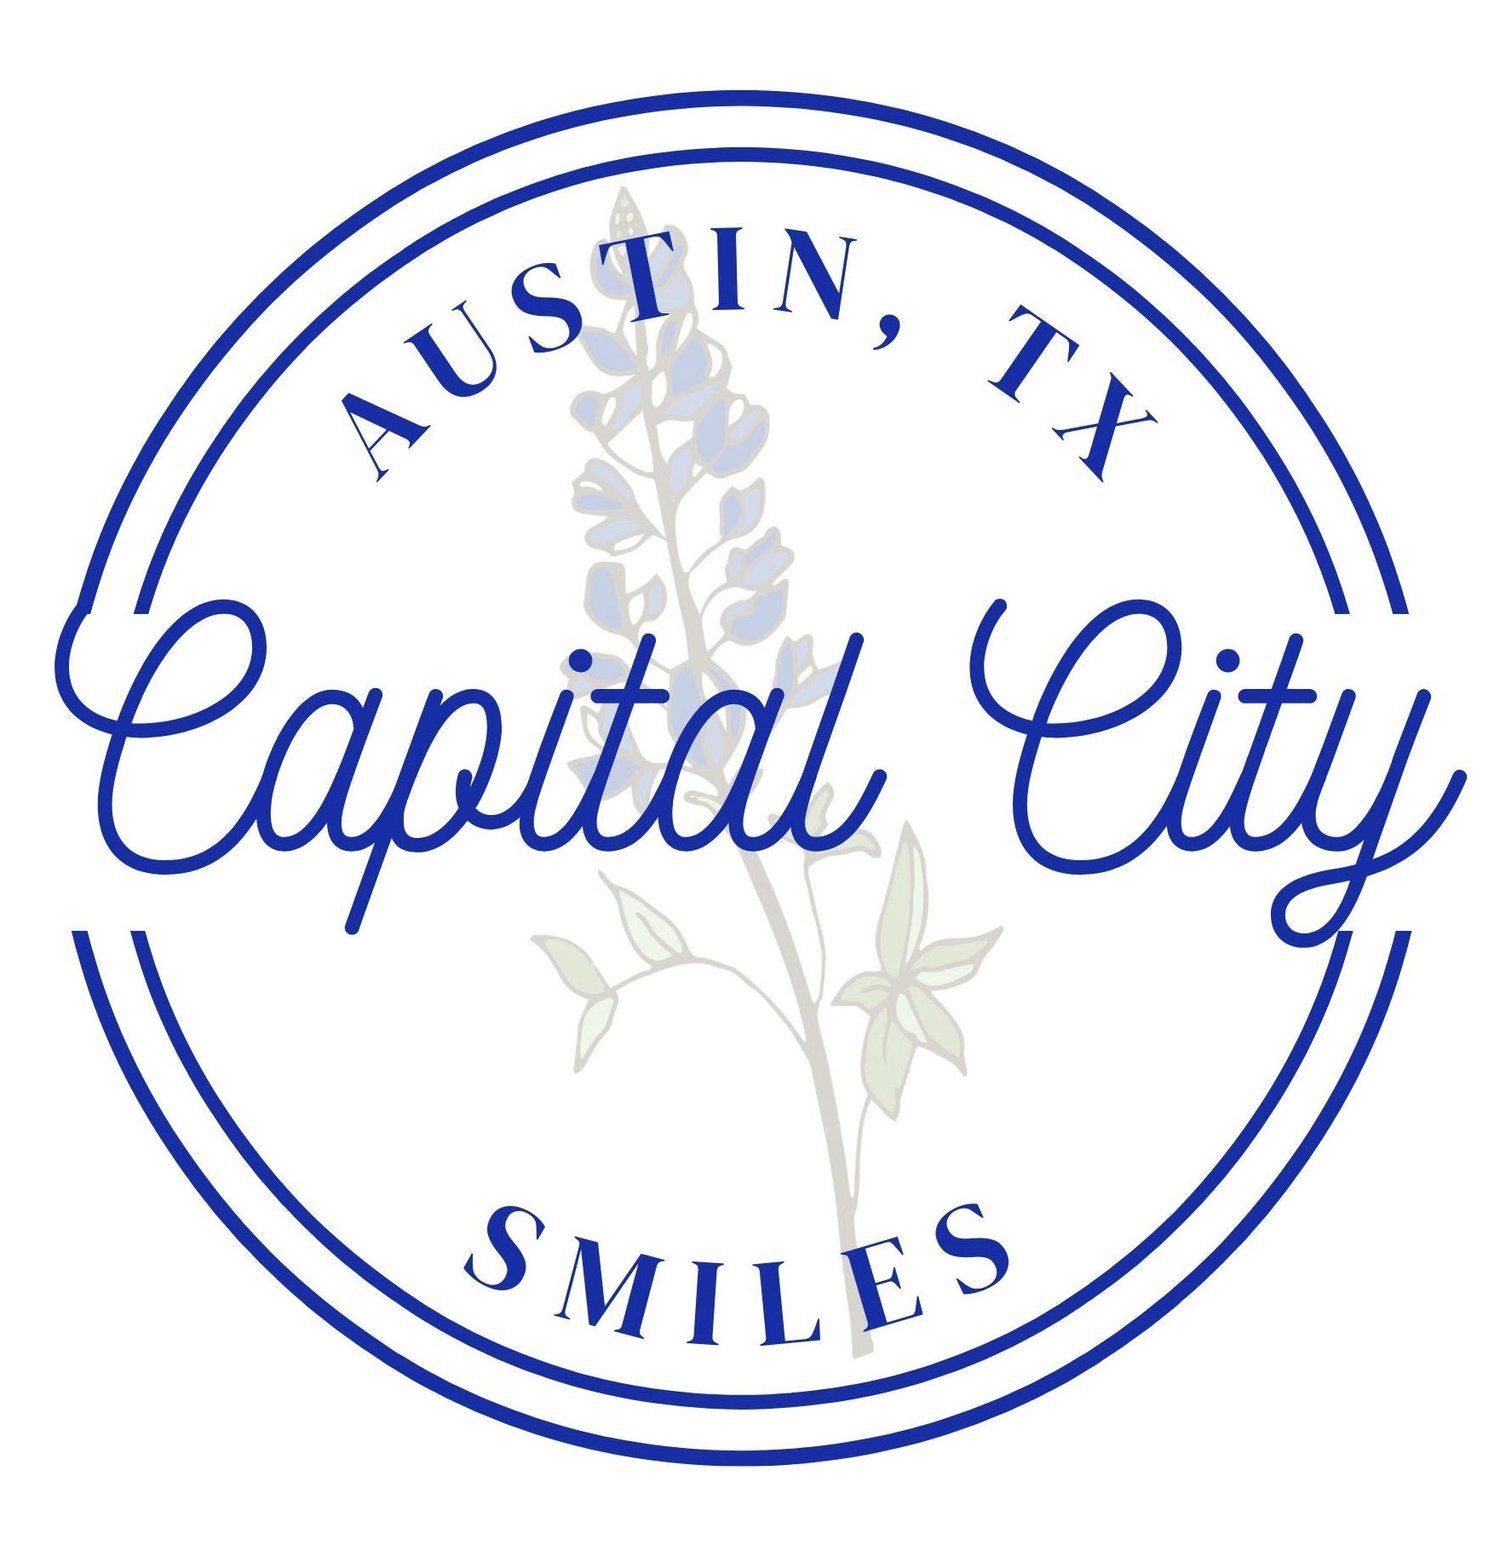 capital city smiles logo